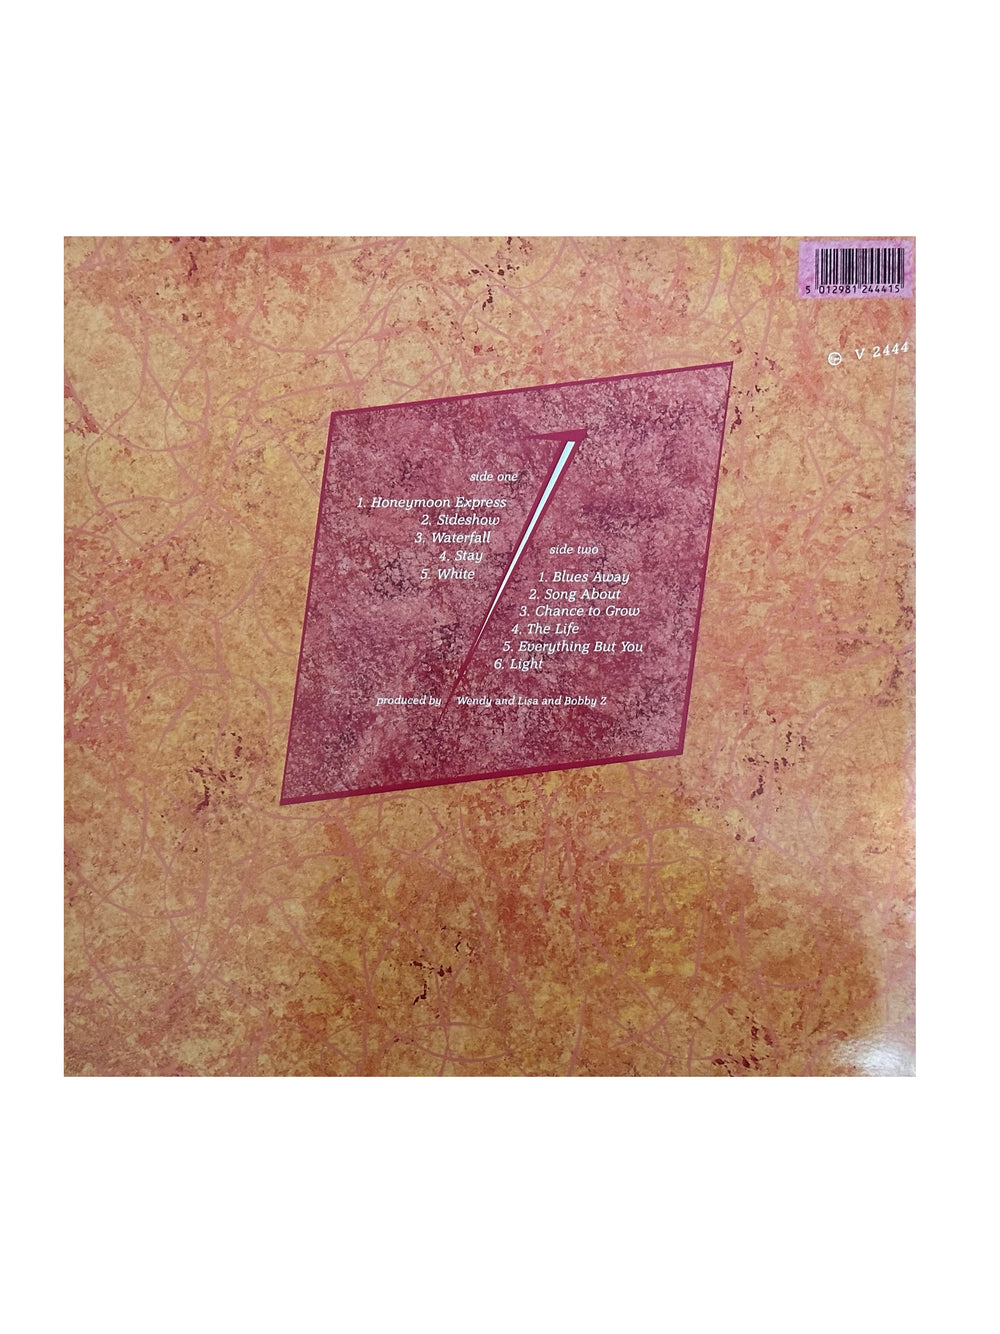 Prince - Wendy & Lisa Self Titled 1st Vinyl Album UK / EU Play Tested Preloved: 1987